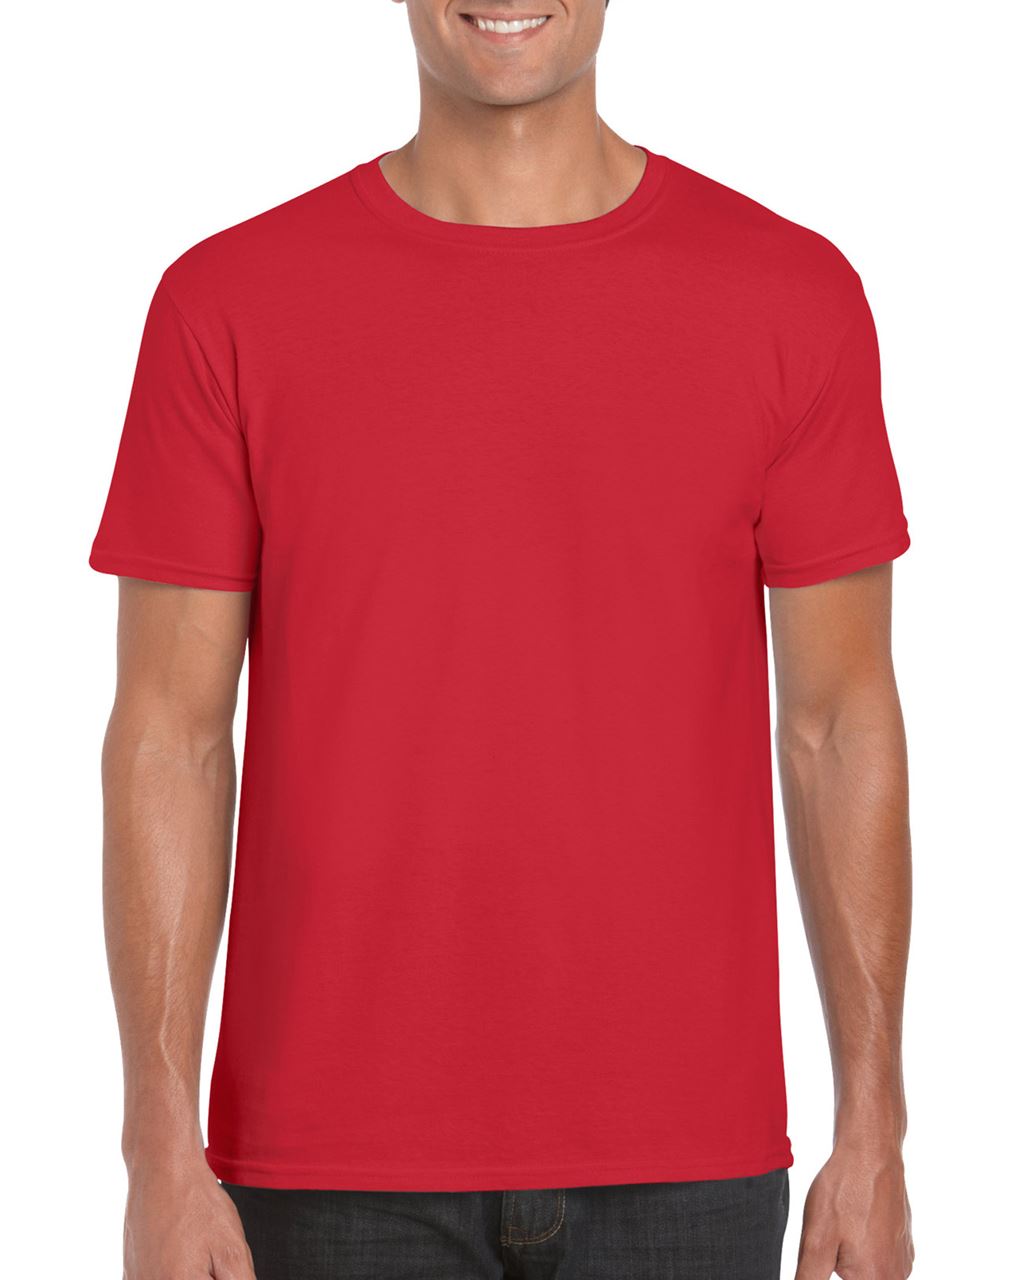 Koszulka Czerwona L